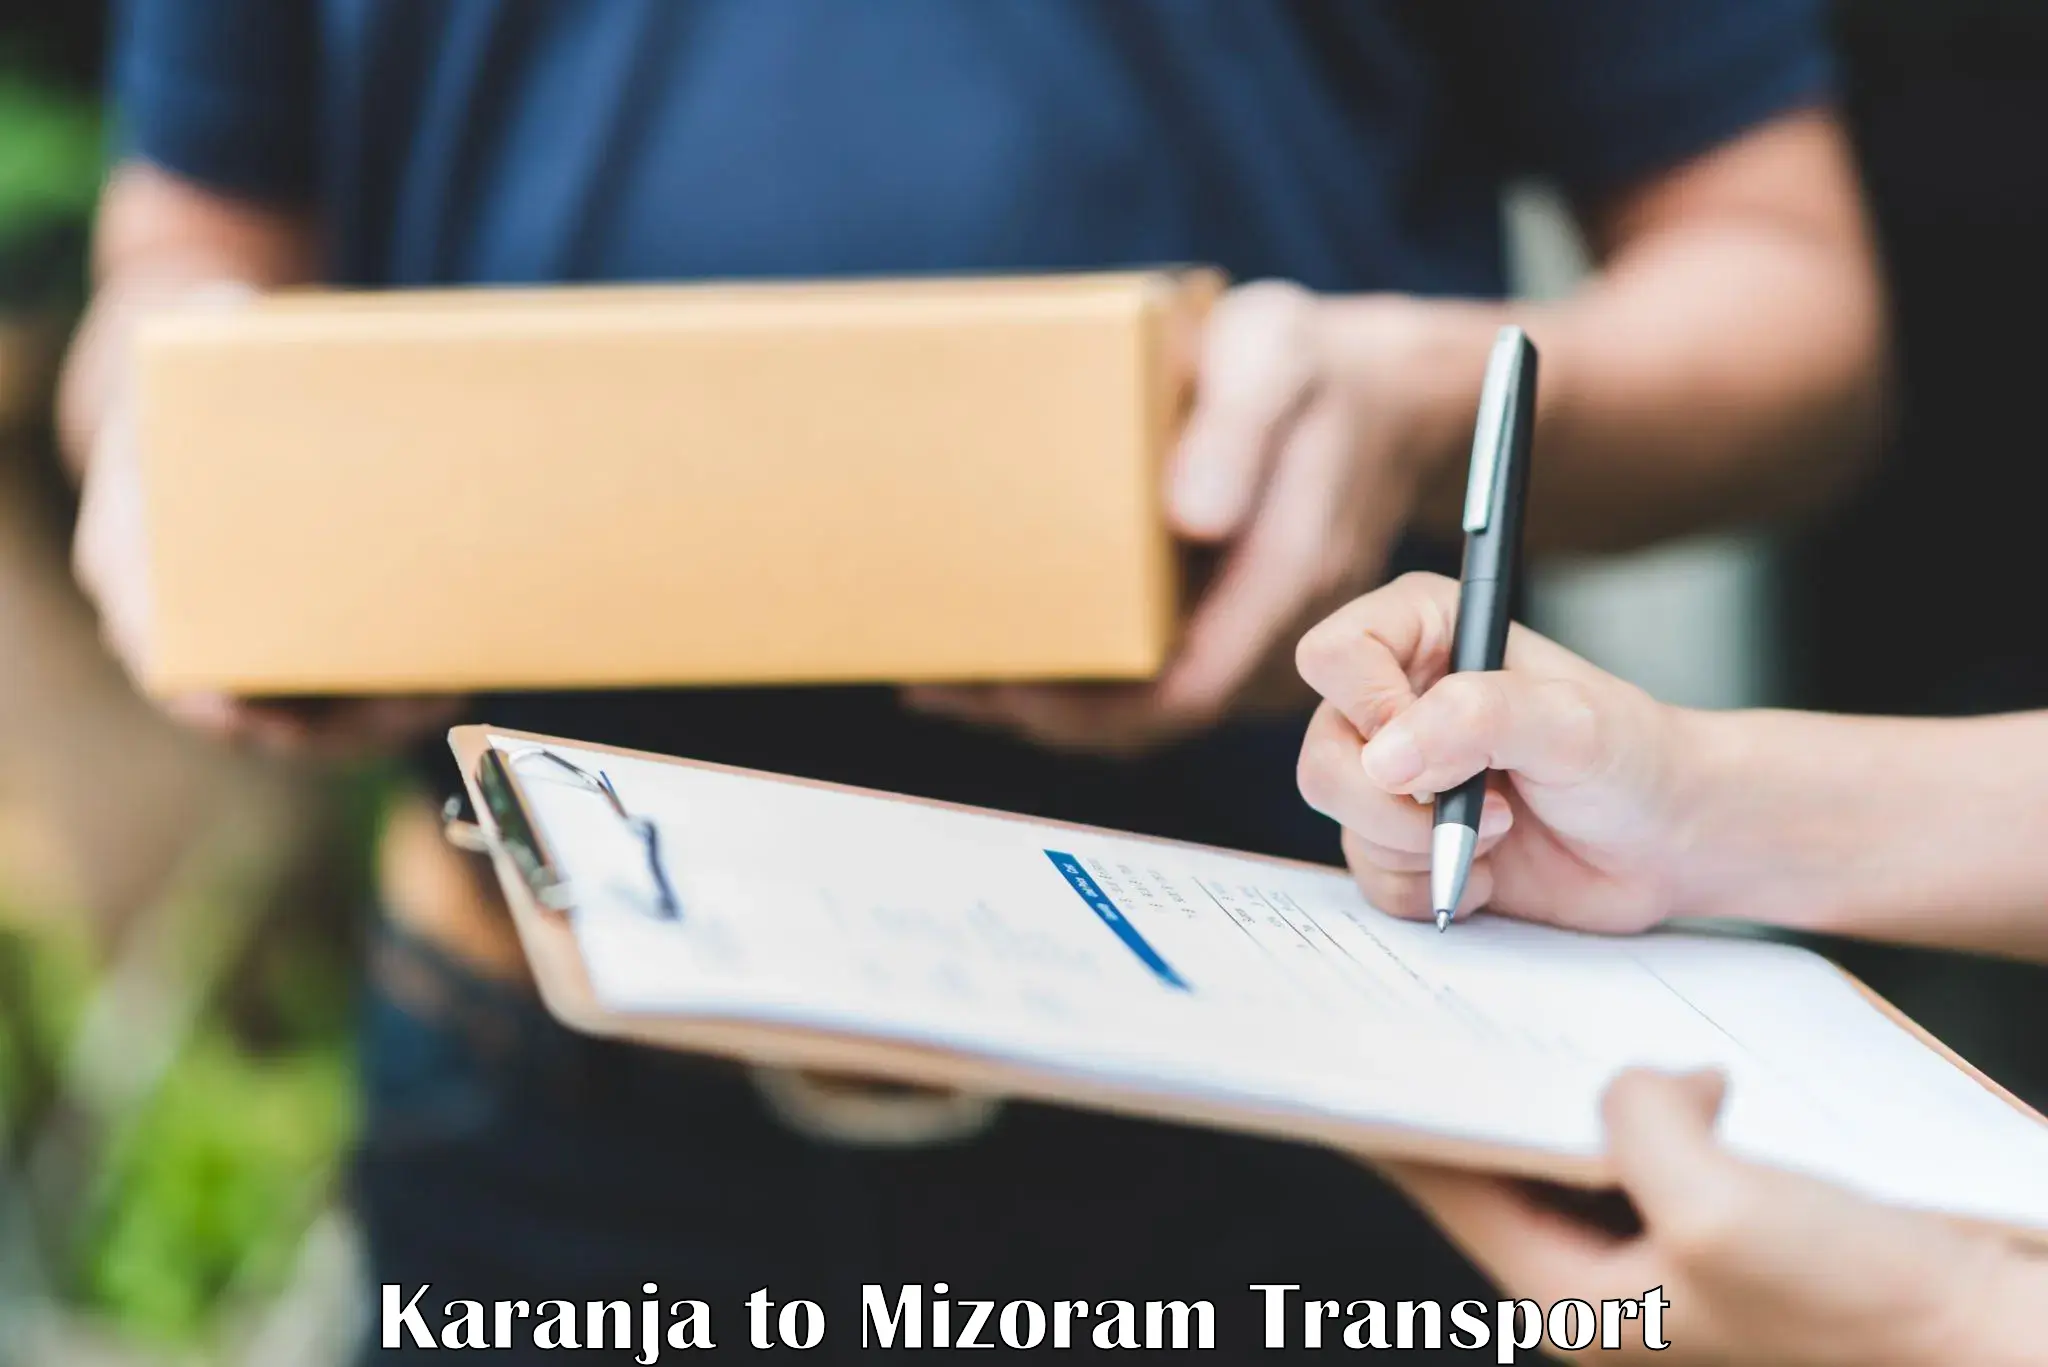 Transport bike from one state to another Karanja to Mizoram